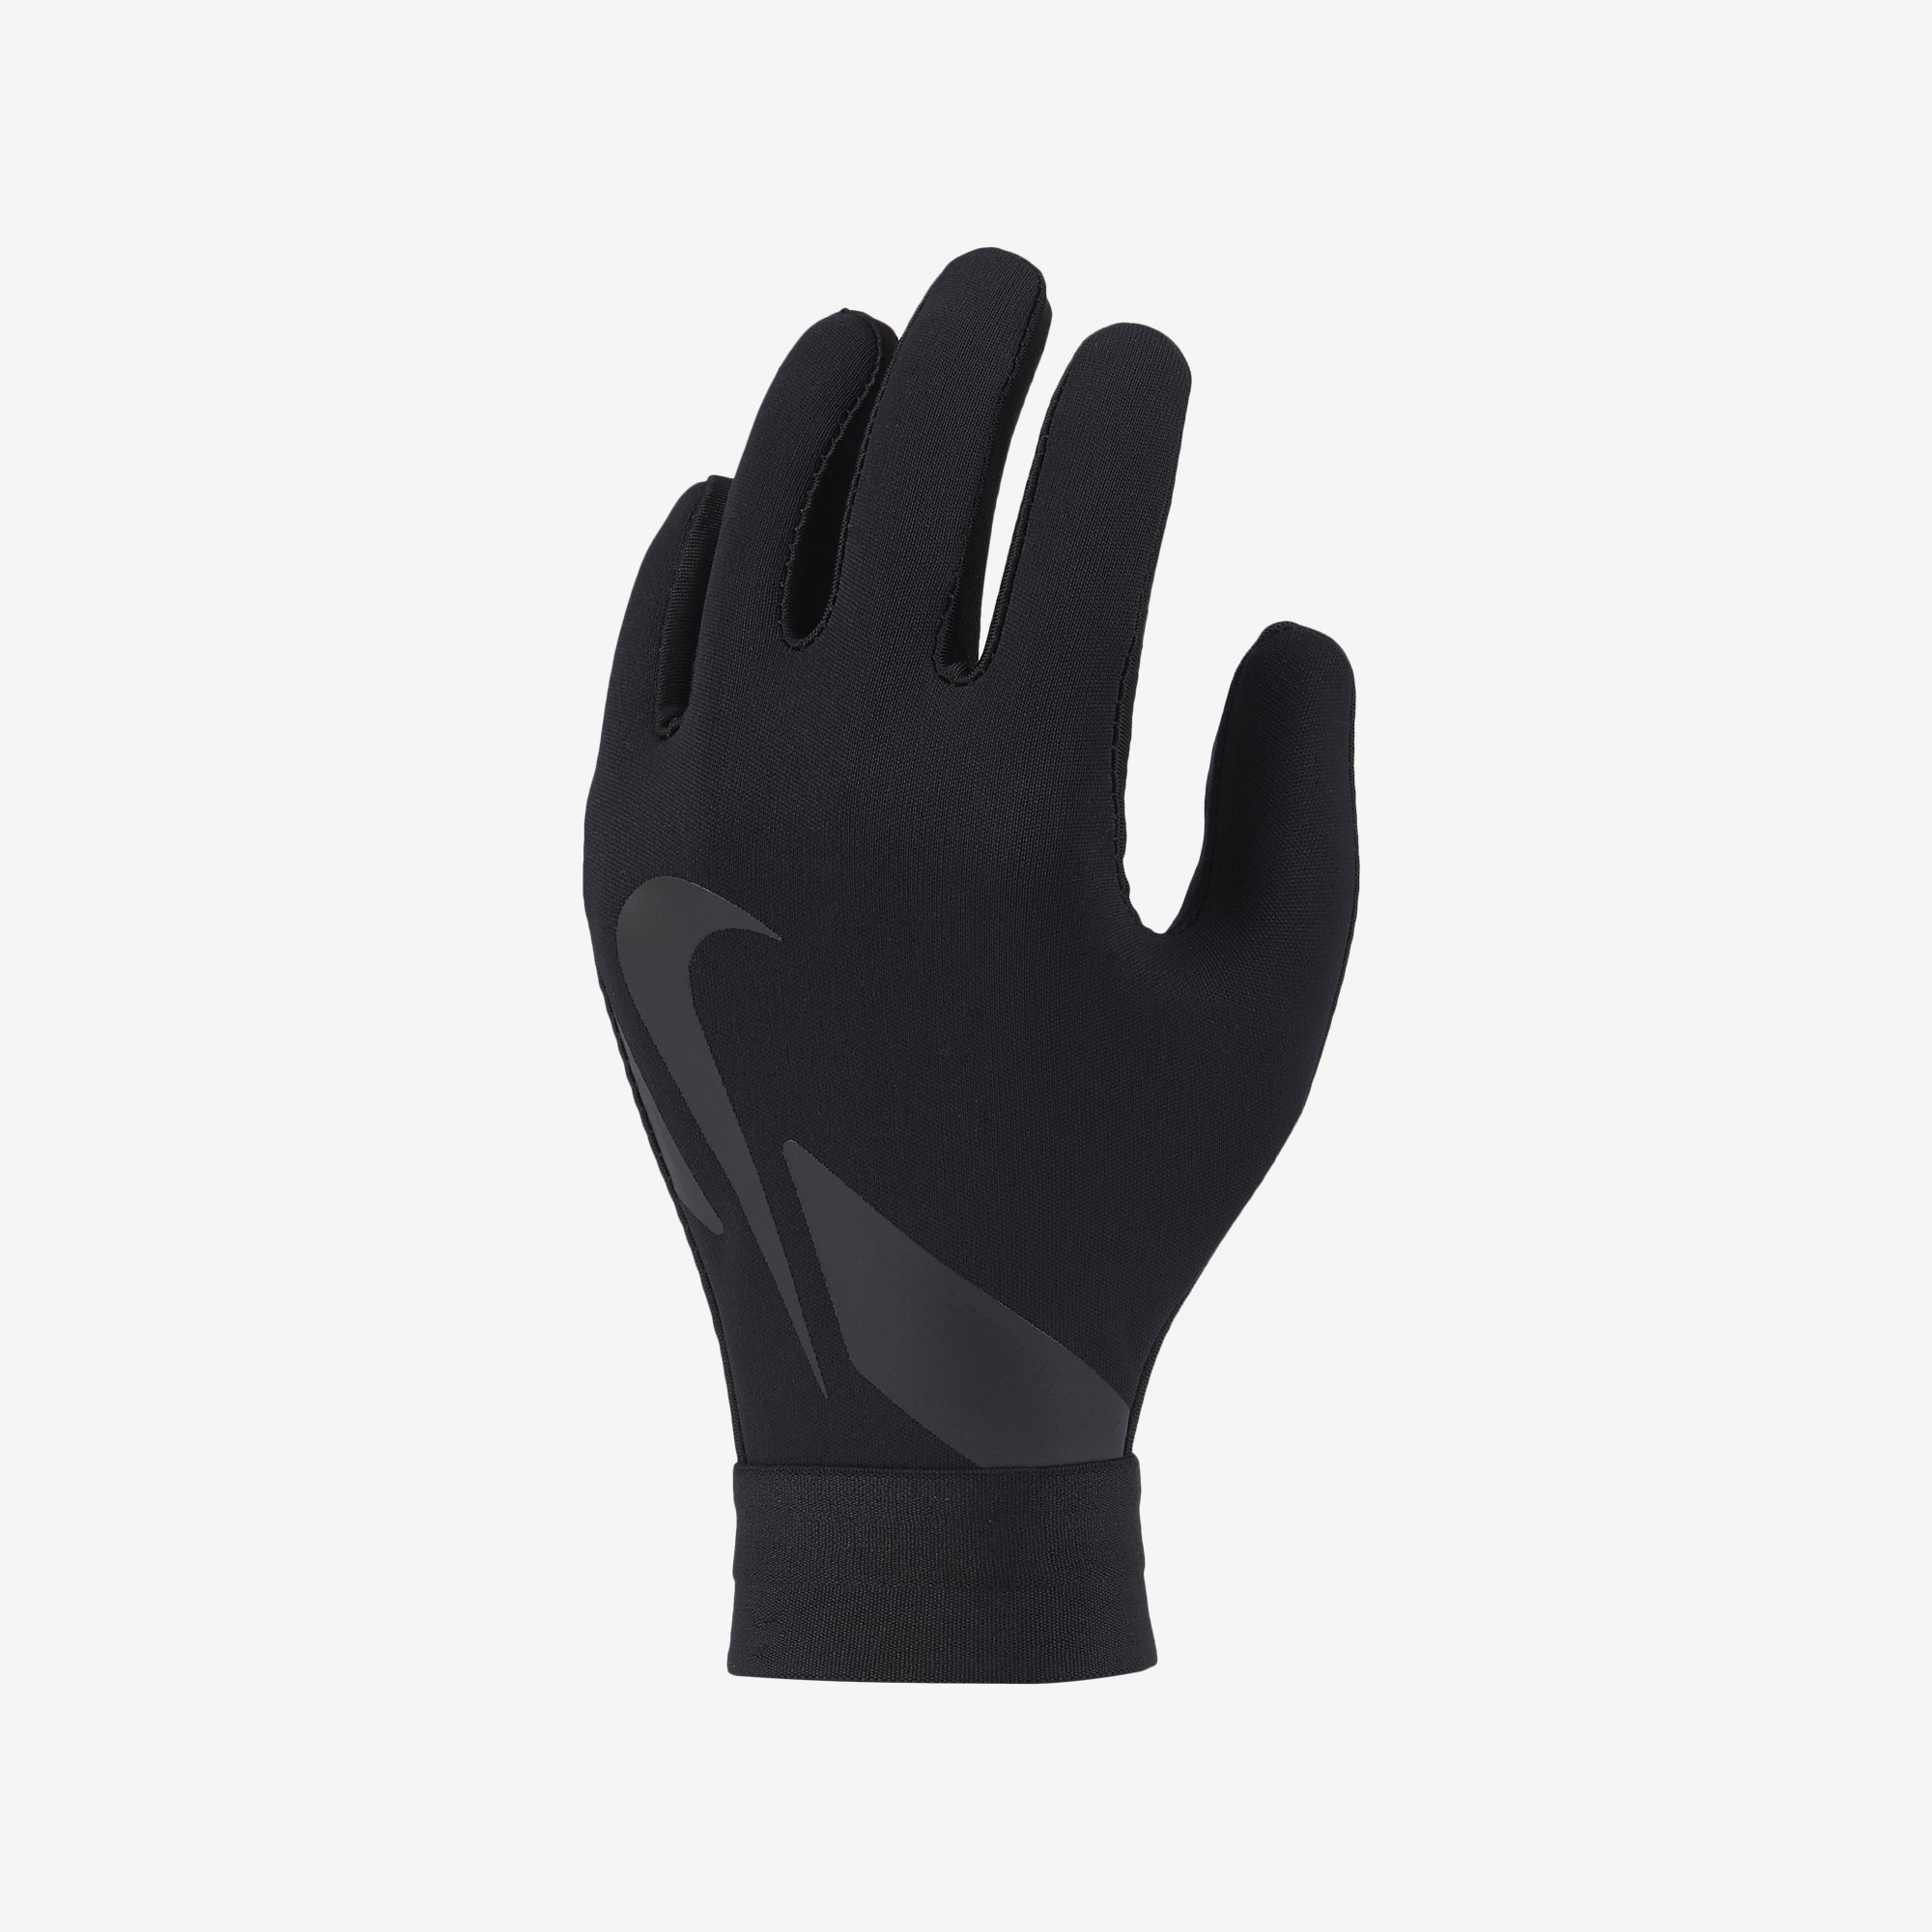 verdieping Denk vooruit adopteren stefanssoccer.com:Nike Youth Hyperwarm Academy Field Player Gloves - Black